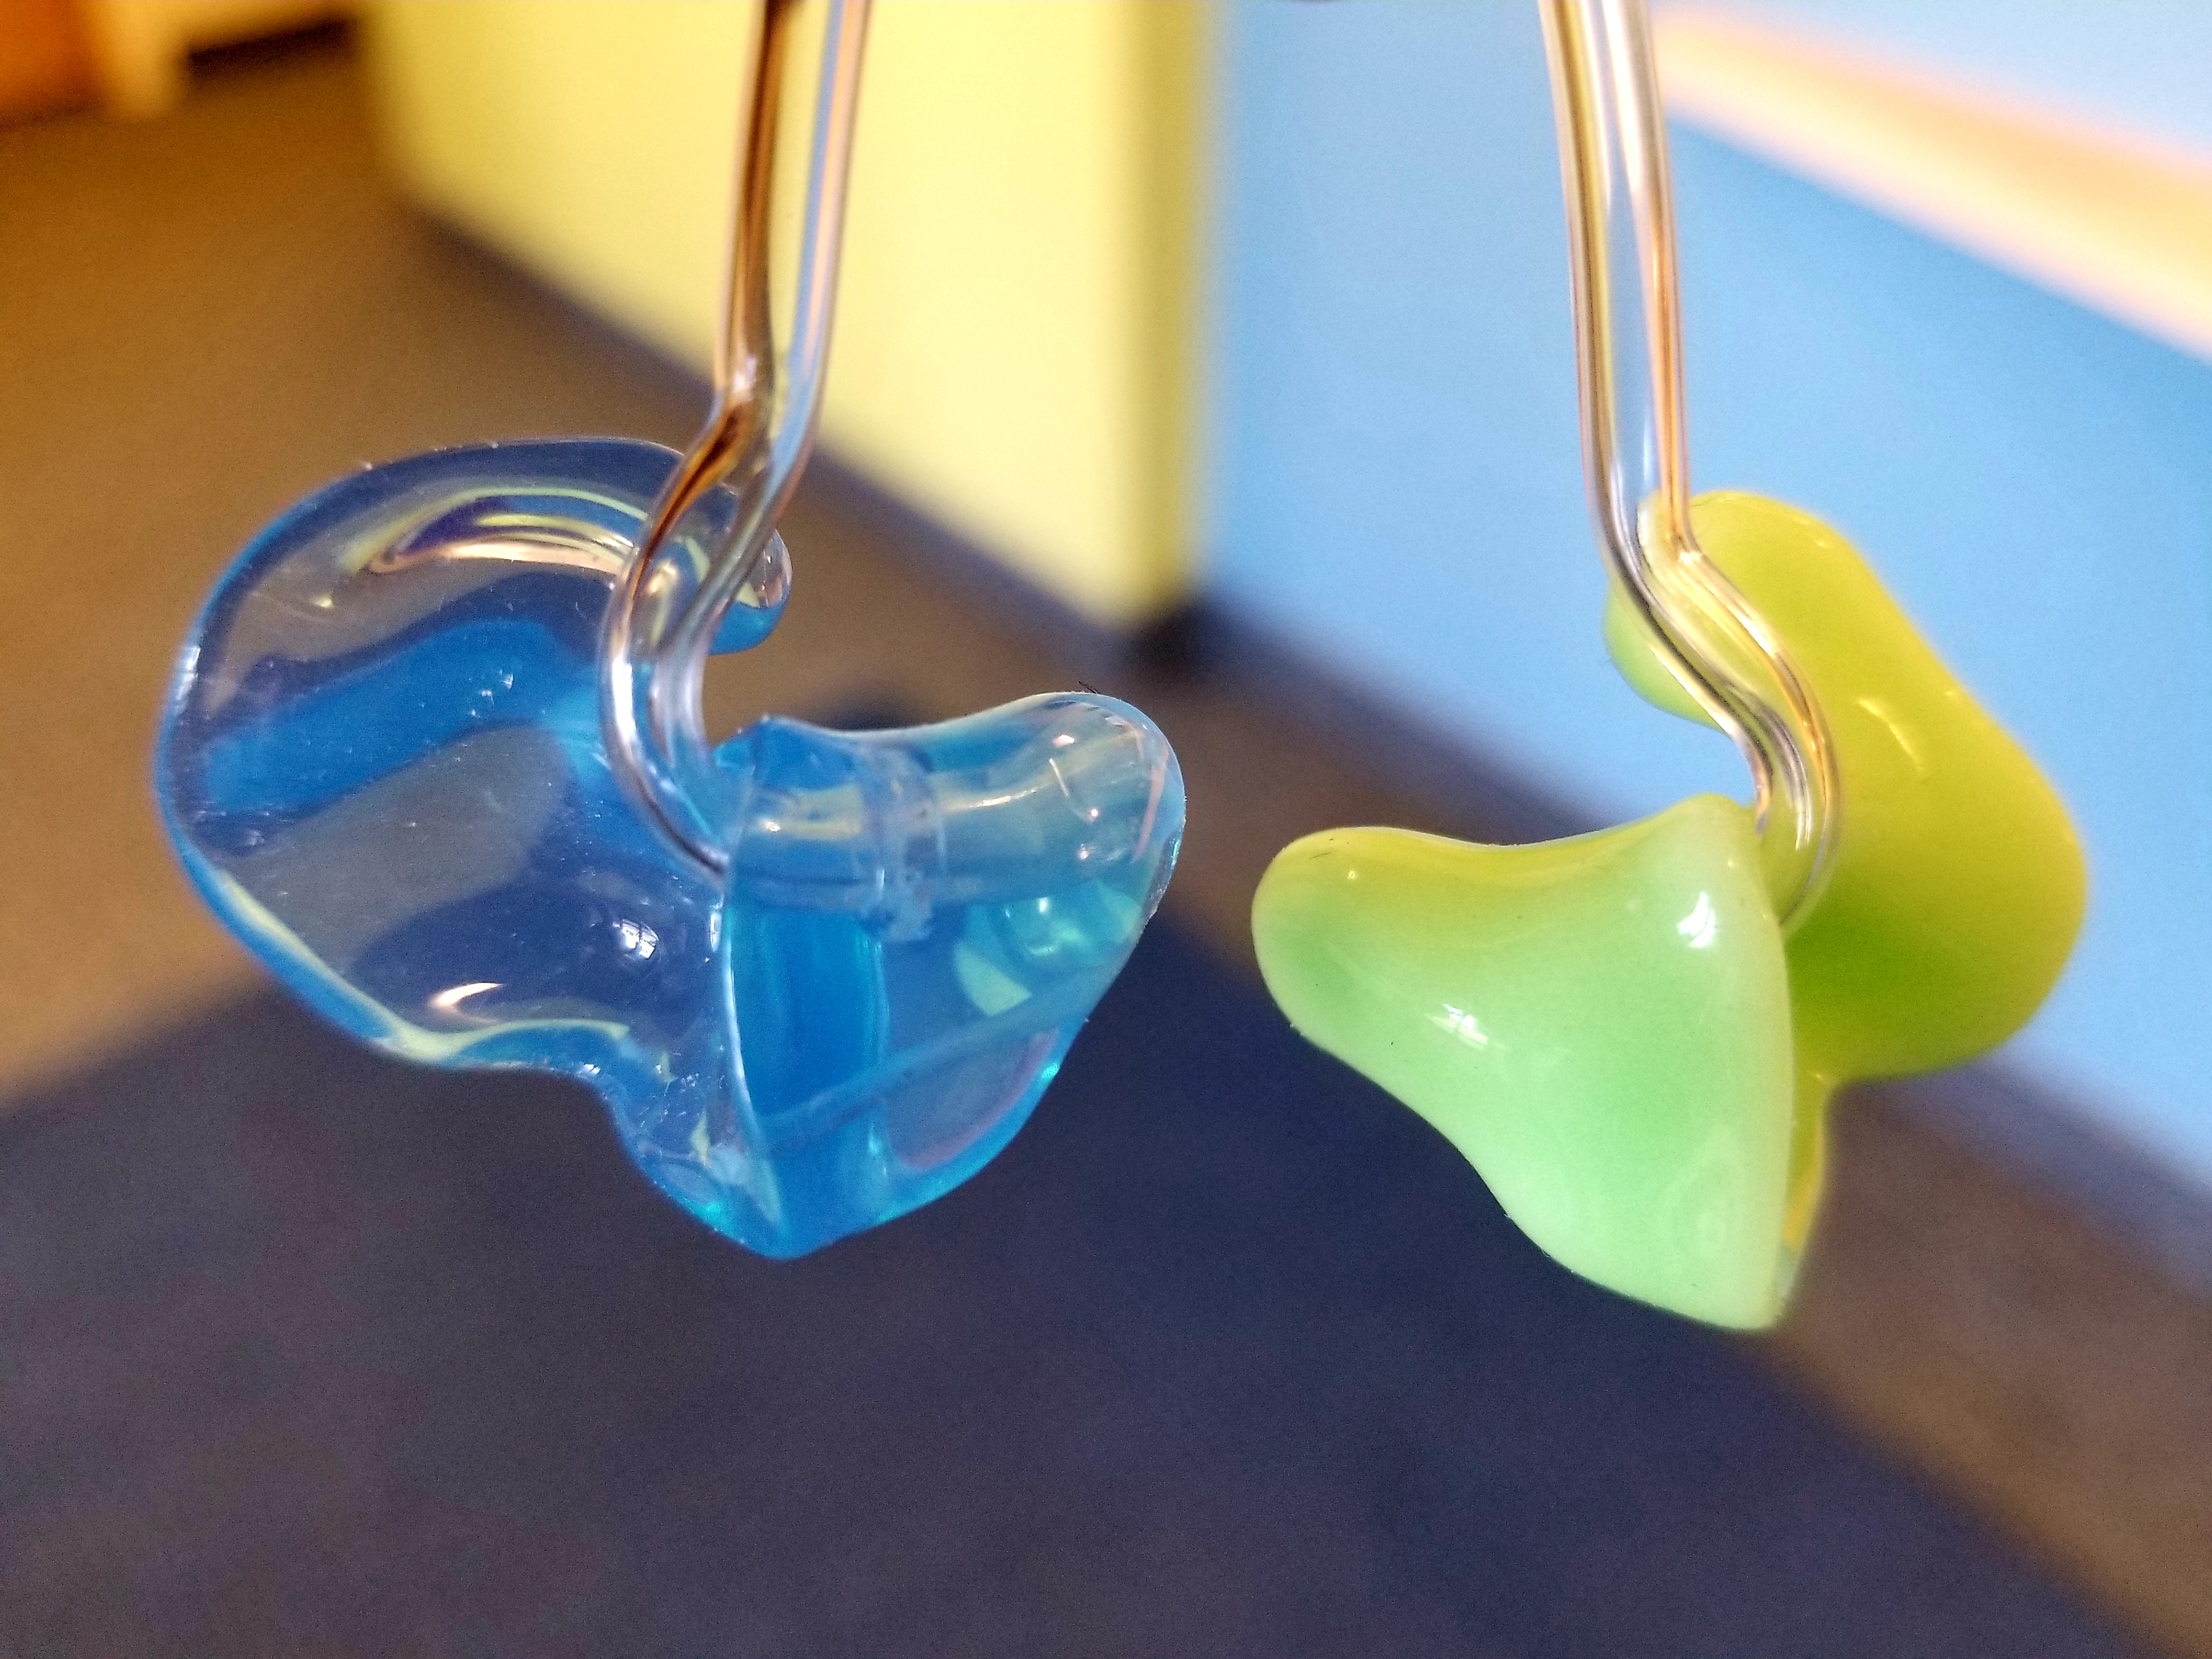 hearing aid ear molds